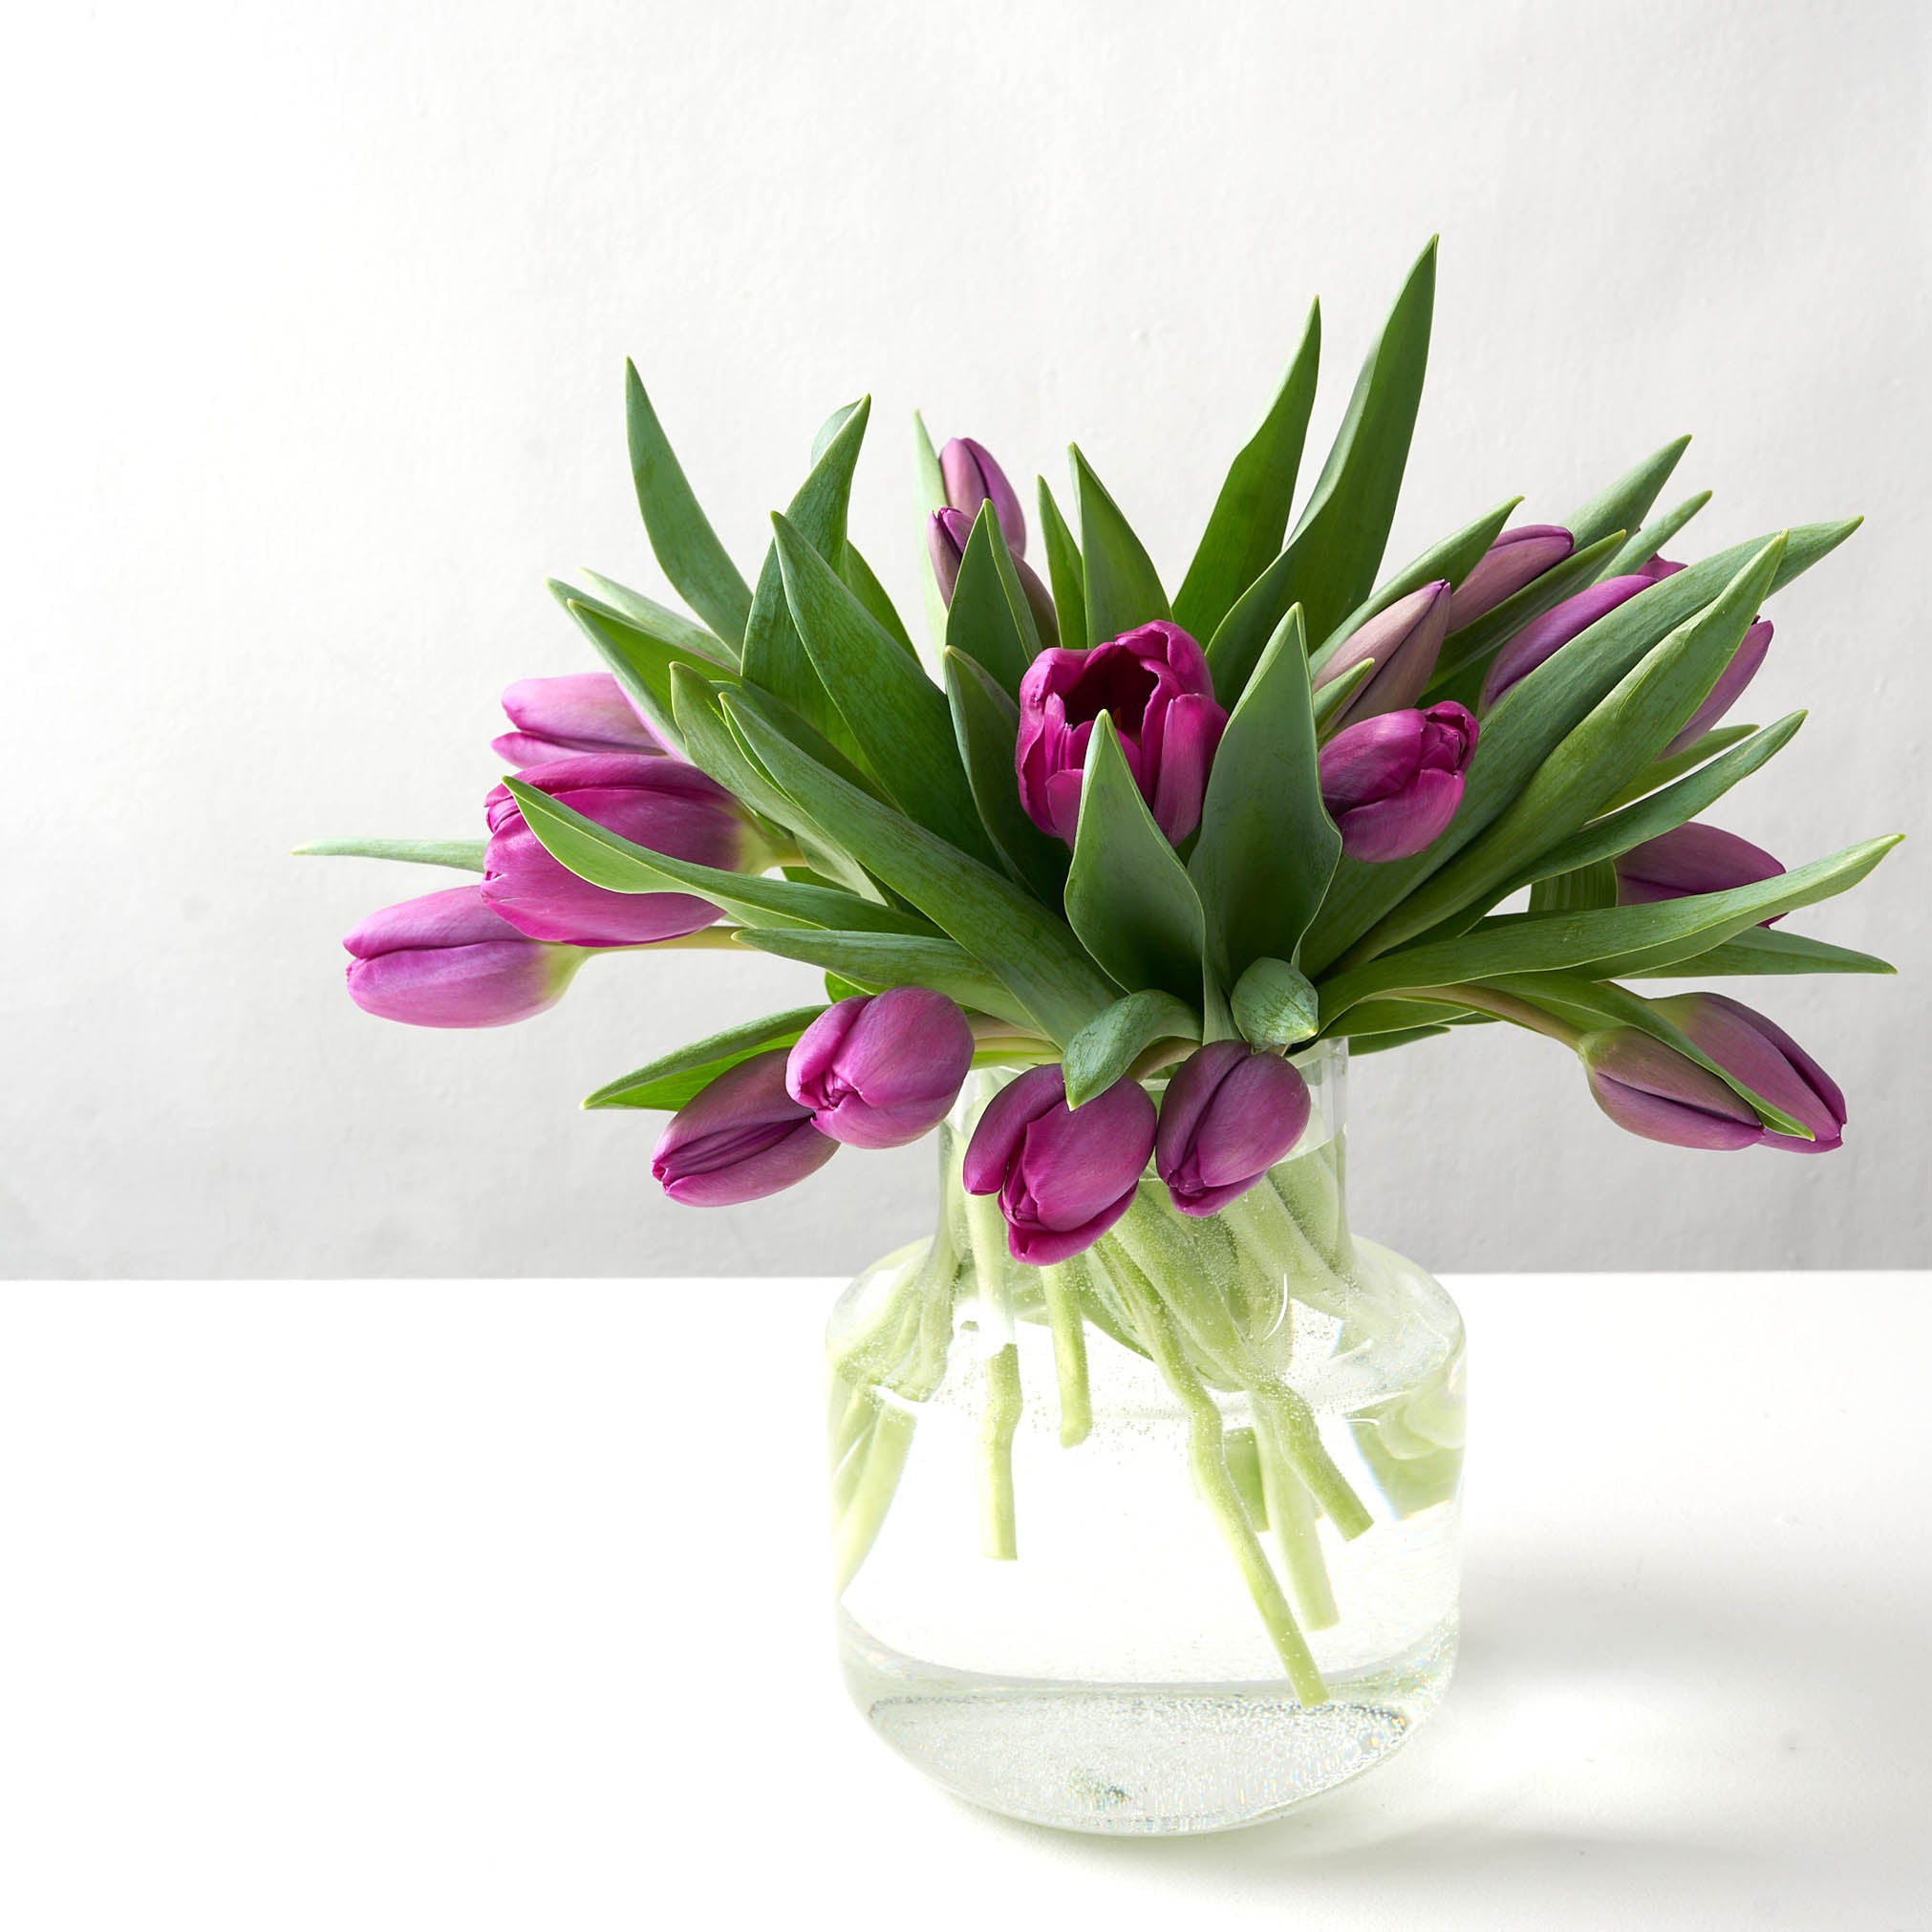 Pricilla (Tulipes violettes arrangées)